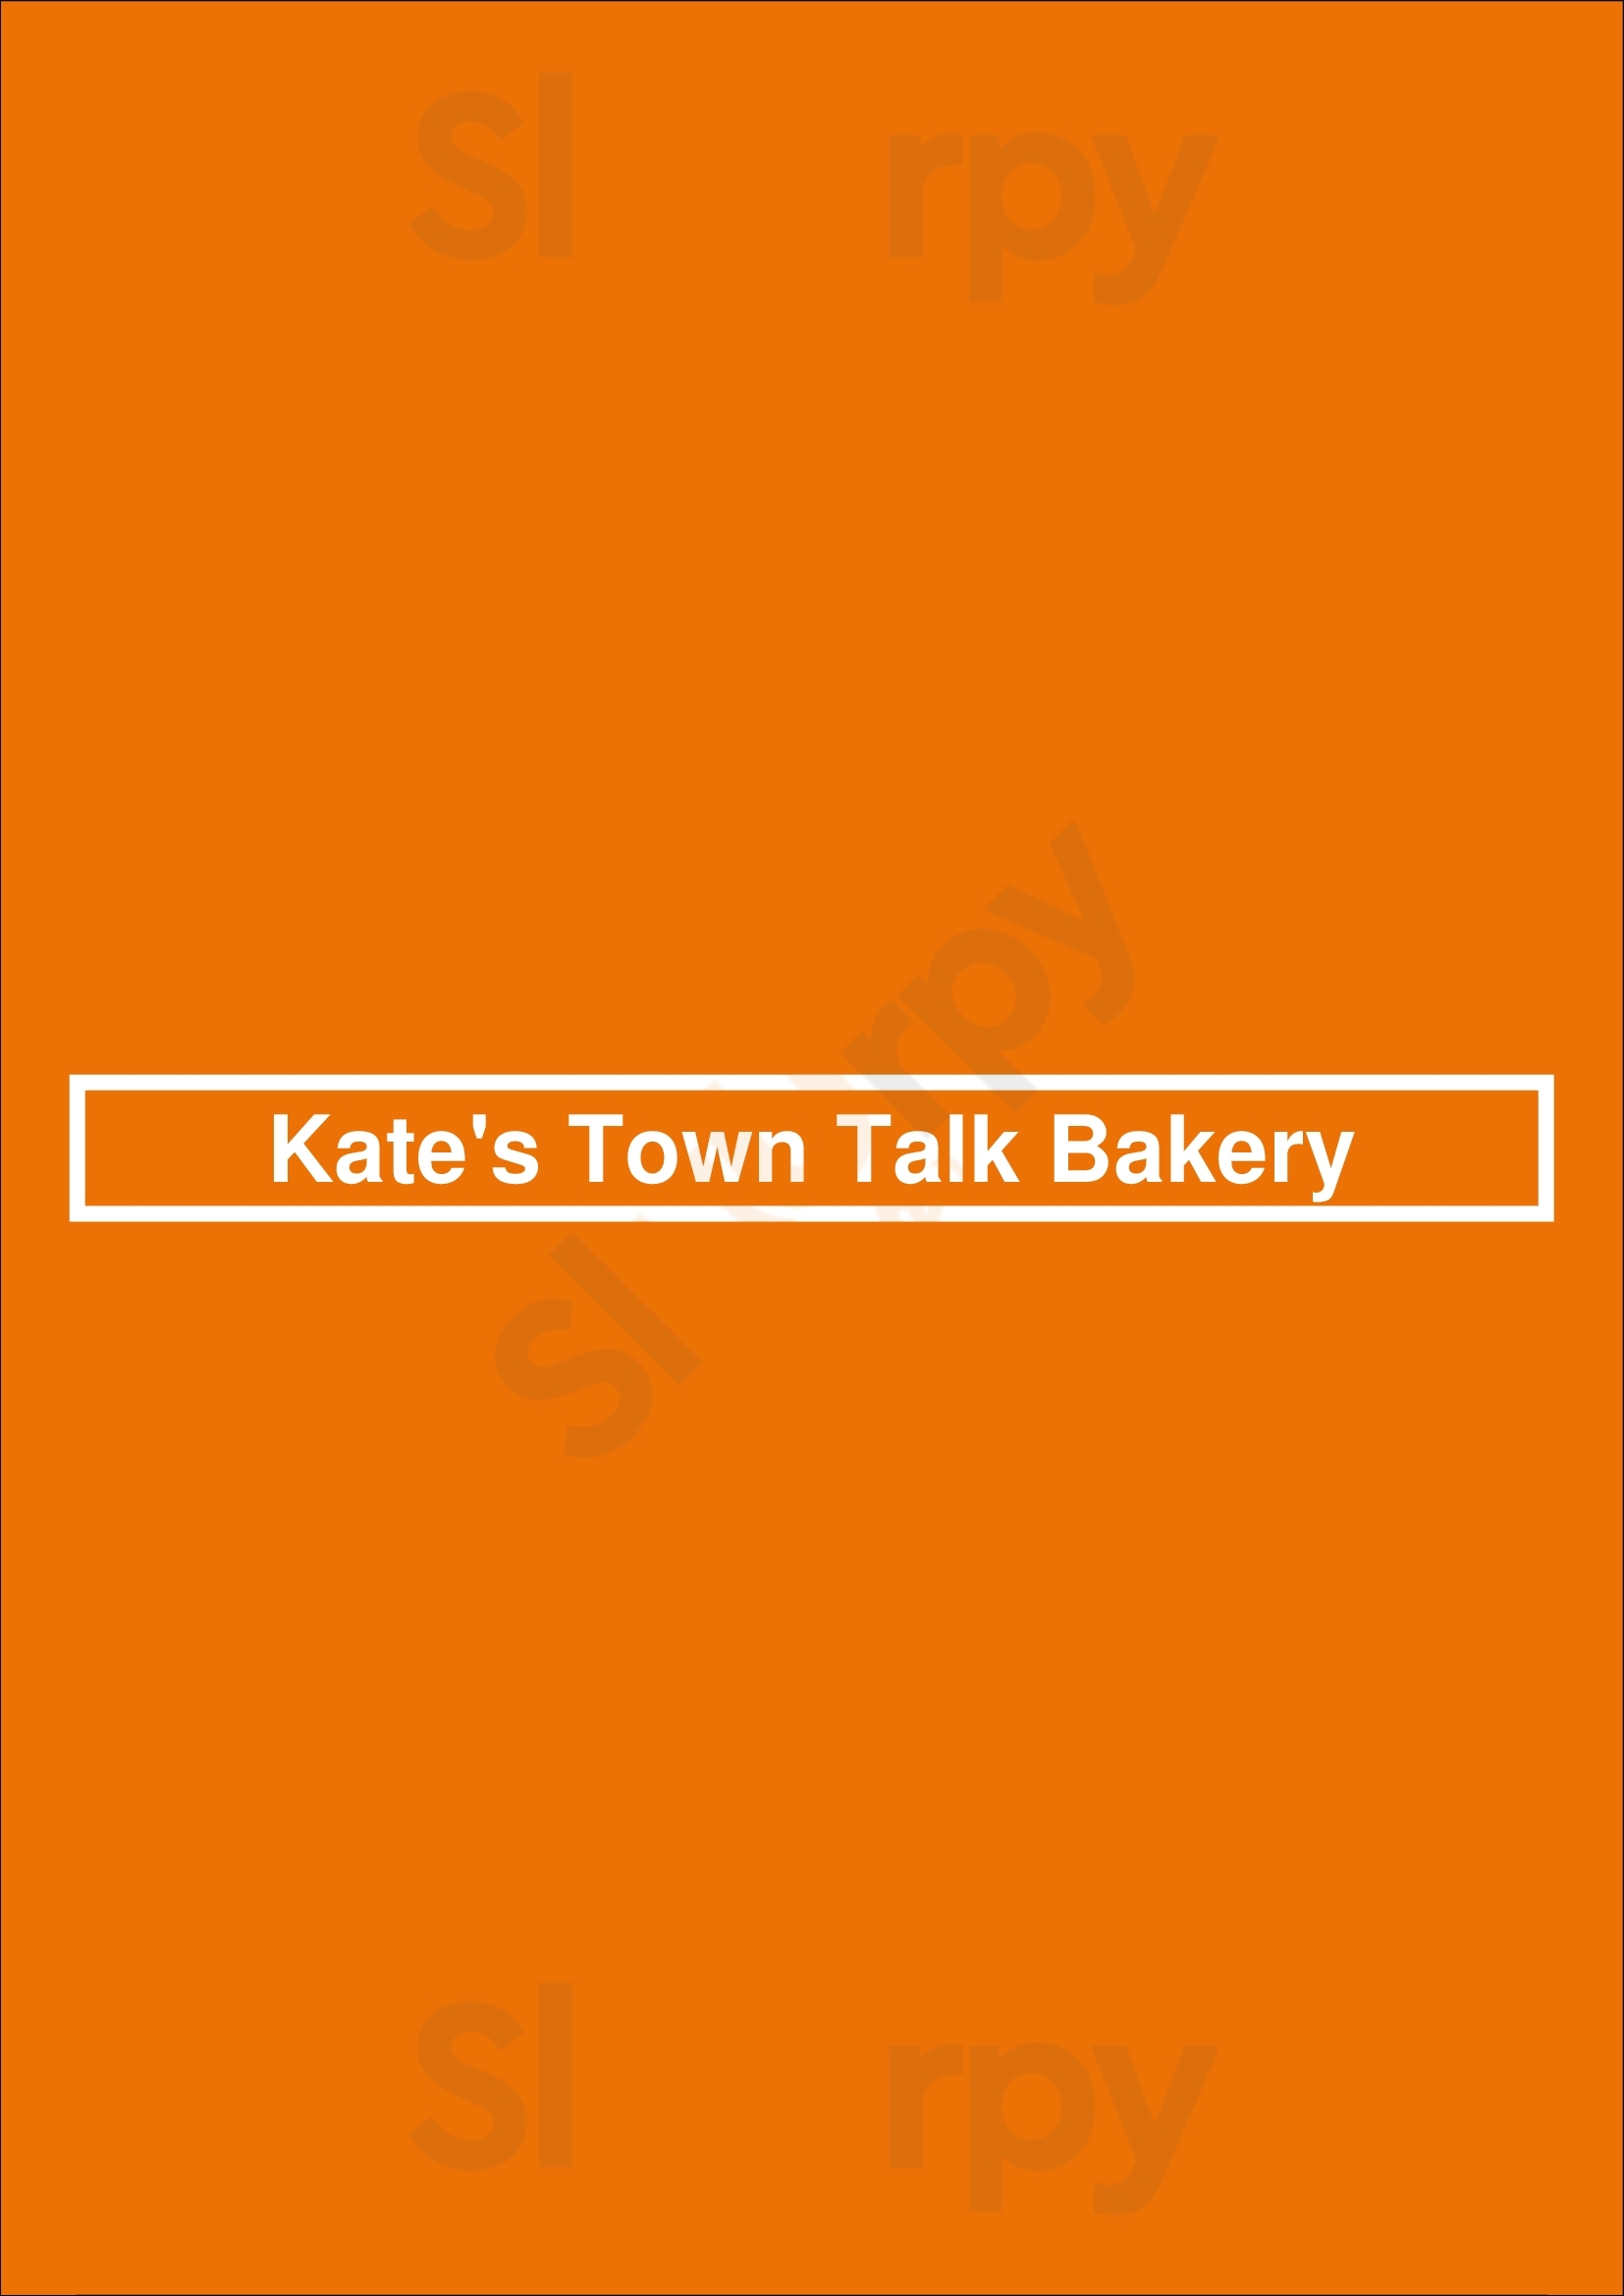 Kate's Town Talk Bakery Mississauga Menu - 1